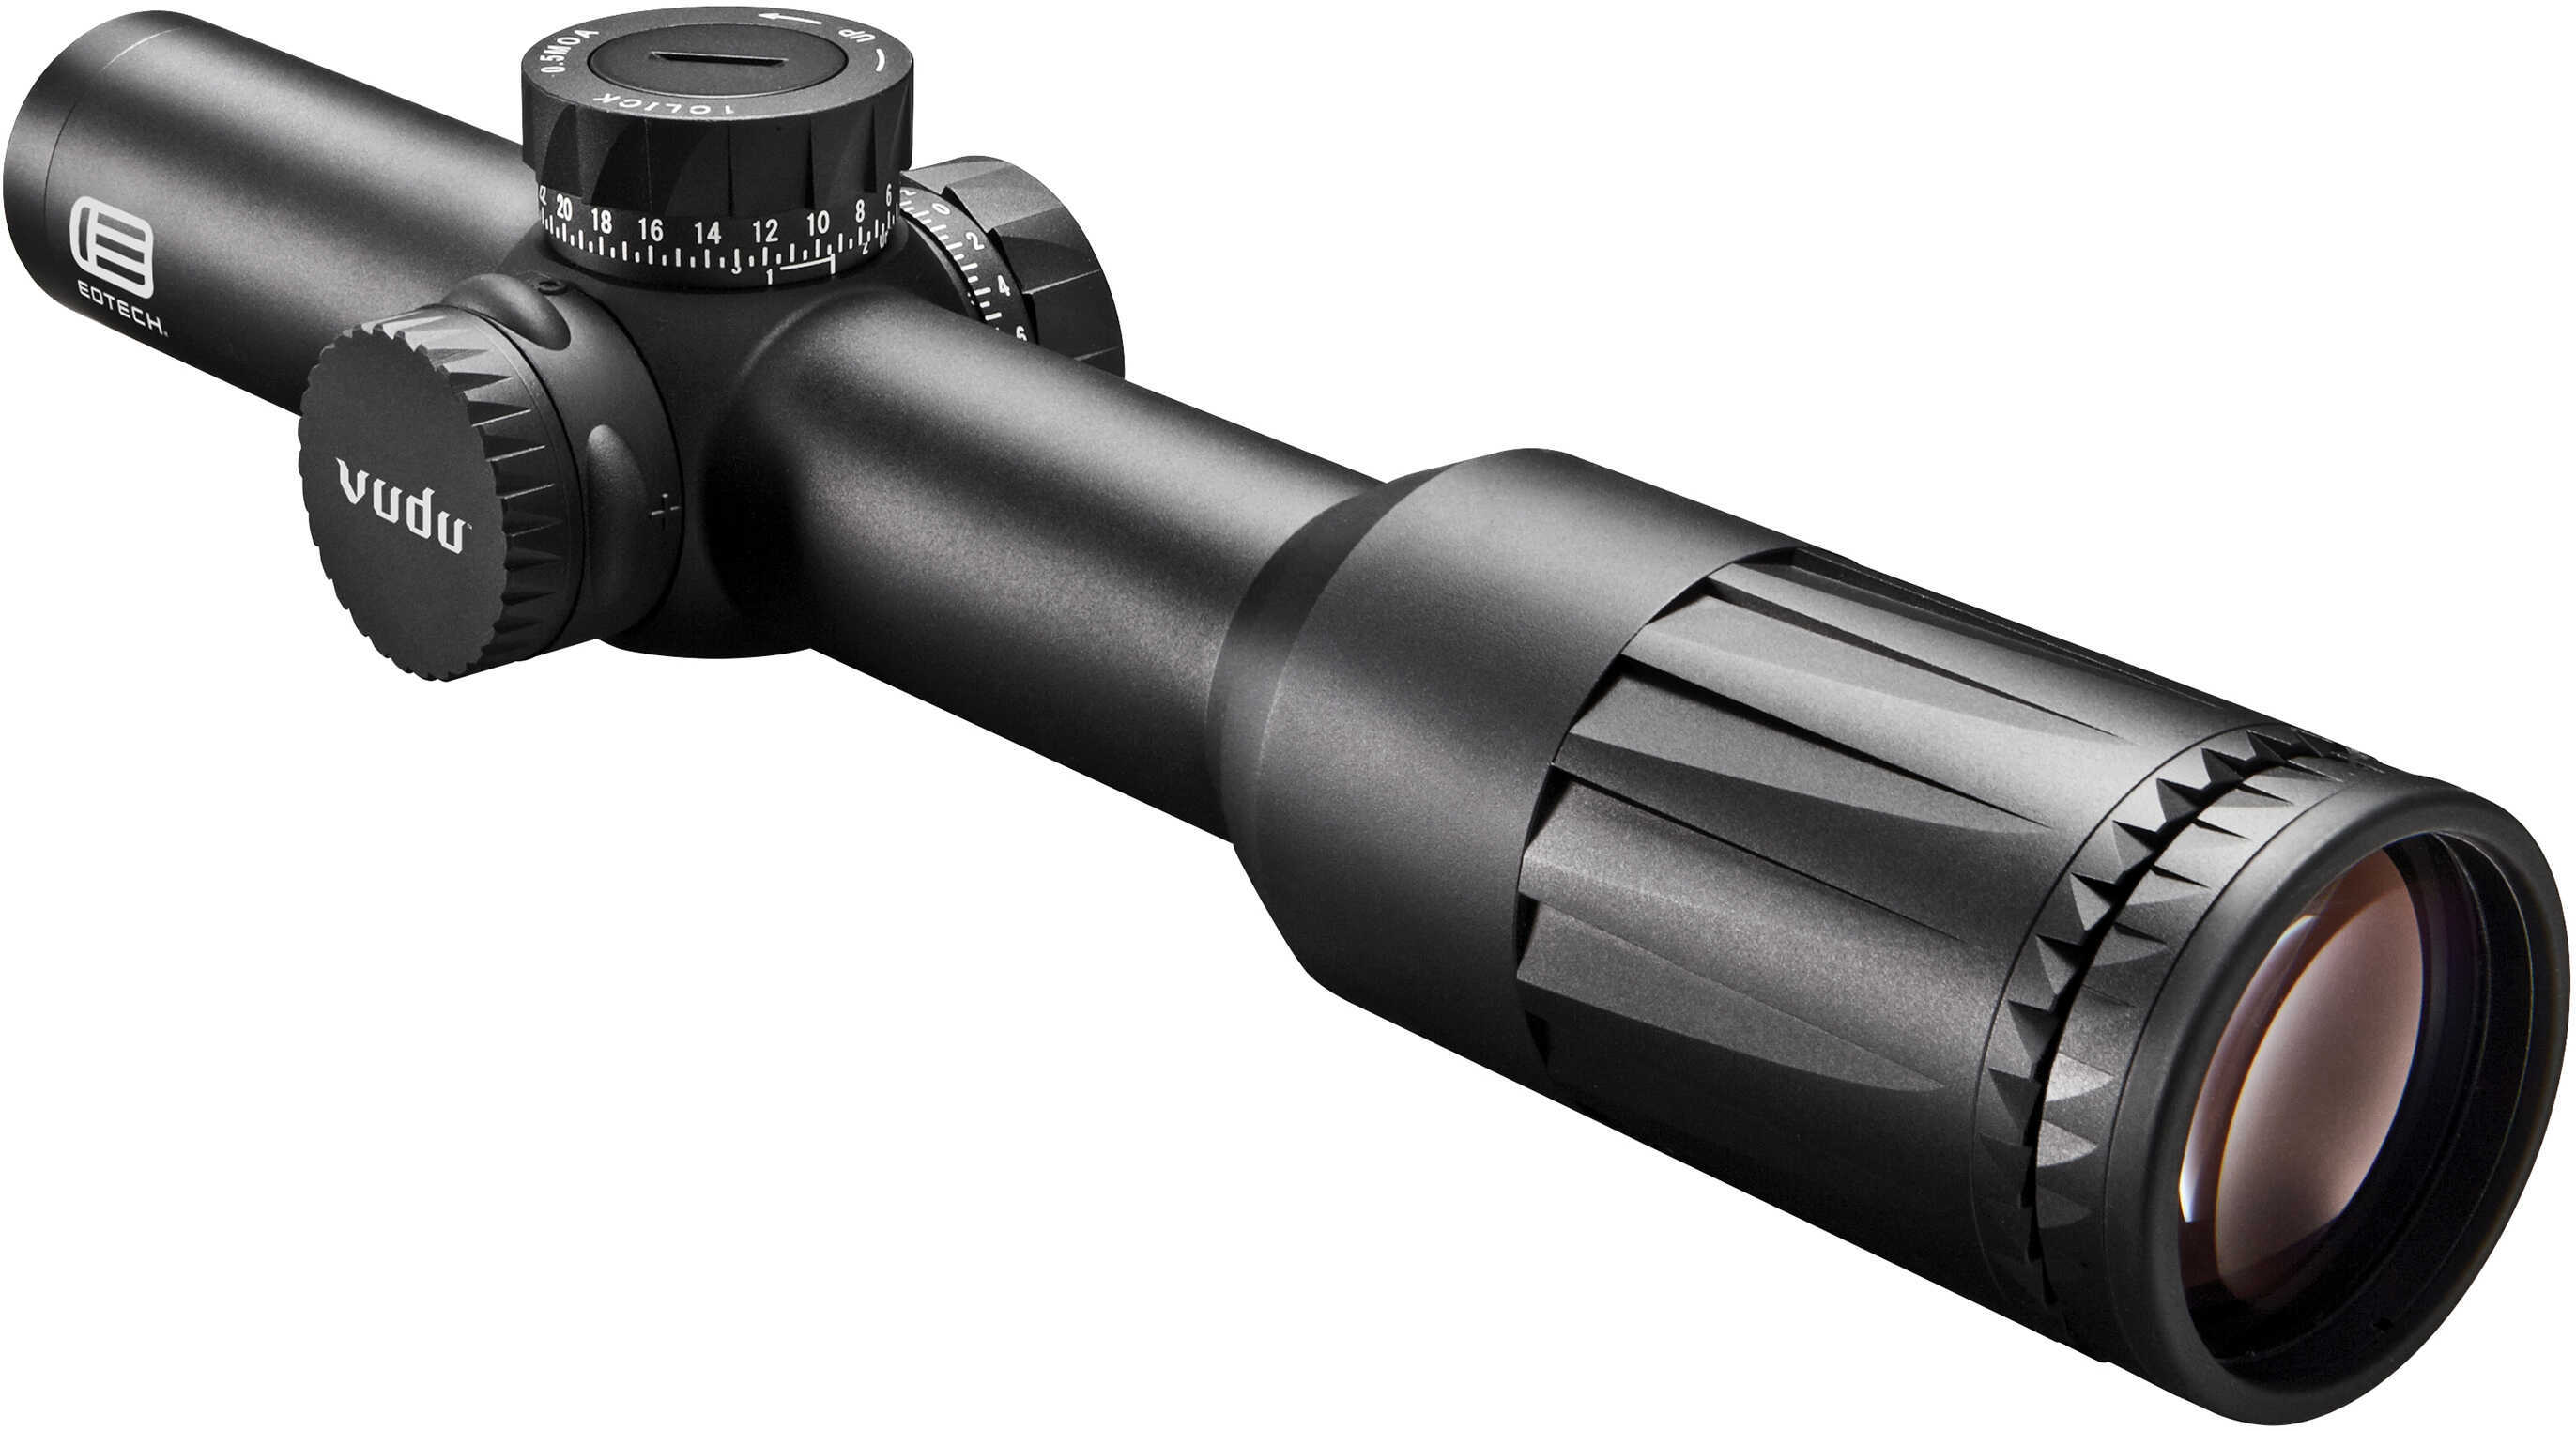 EOTECH VUDU 1-6X24 FFP Riflescope SR2 Reticle